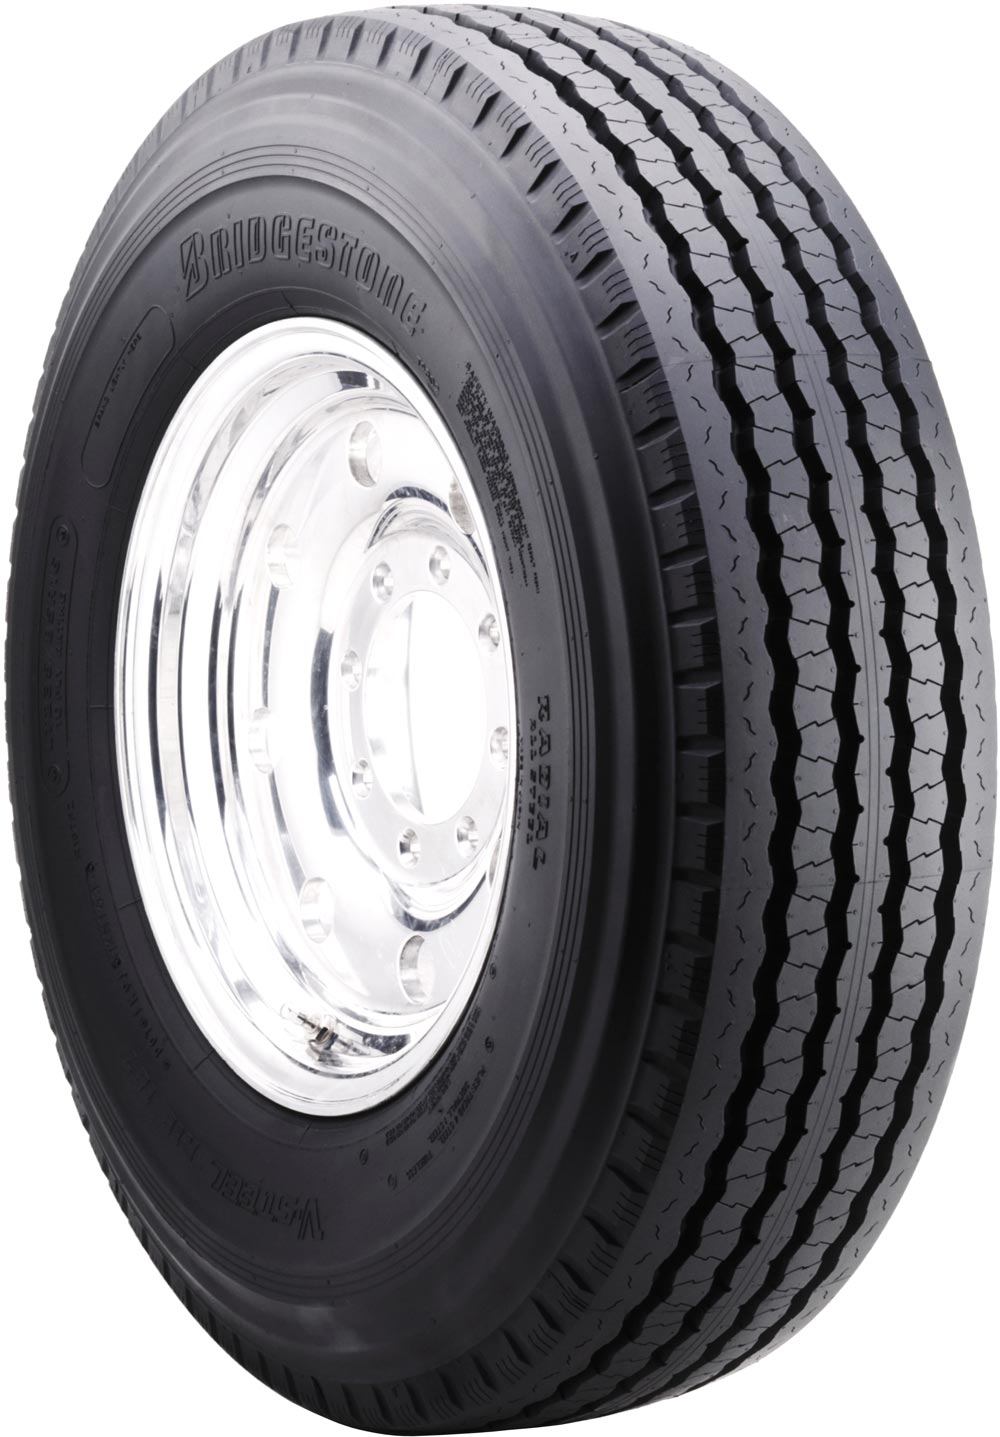 product_type-heavy_tires BRIDGESTONE R187 TT 8.25 R15 143J